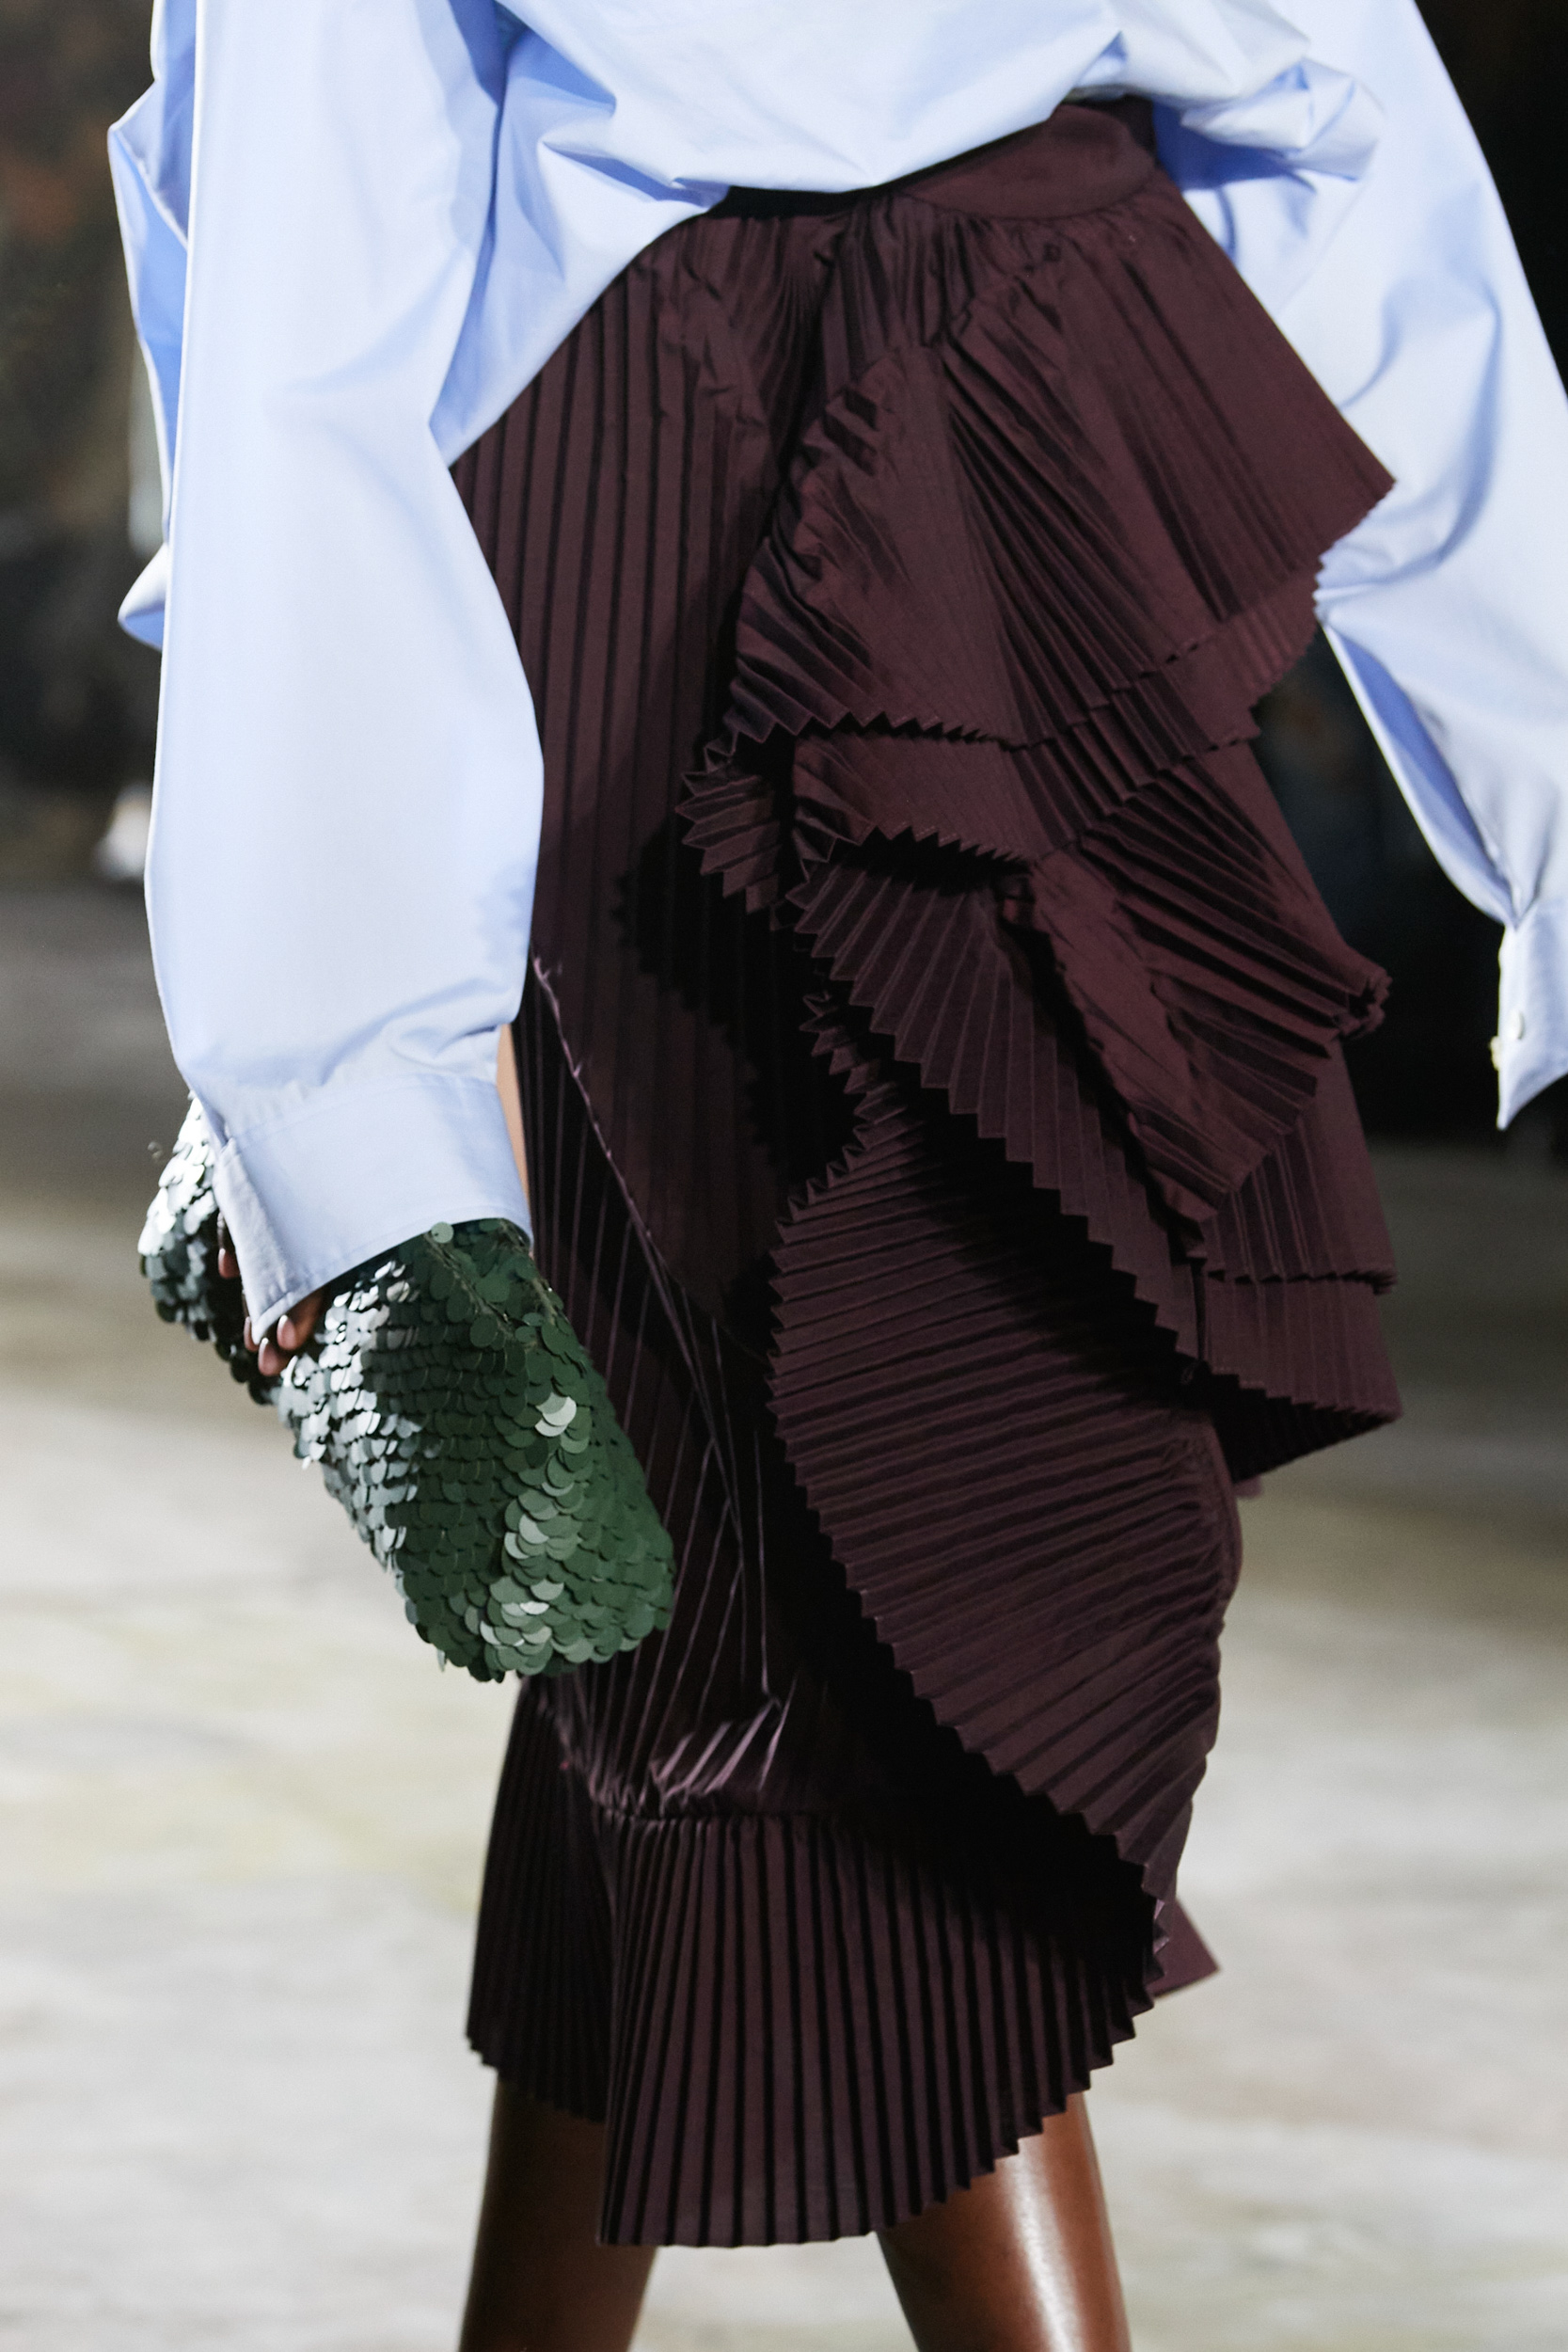 Dries Van Noten Spring 2023 Fashion Show Details | The Impression